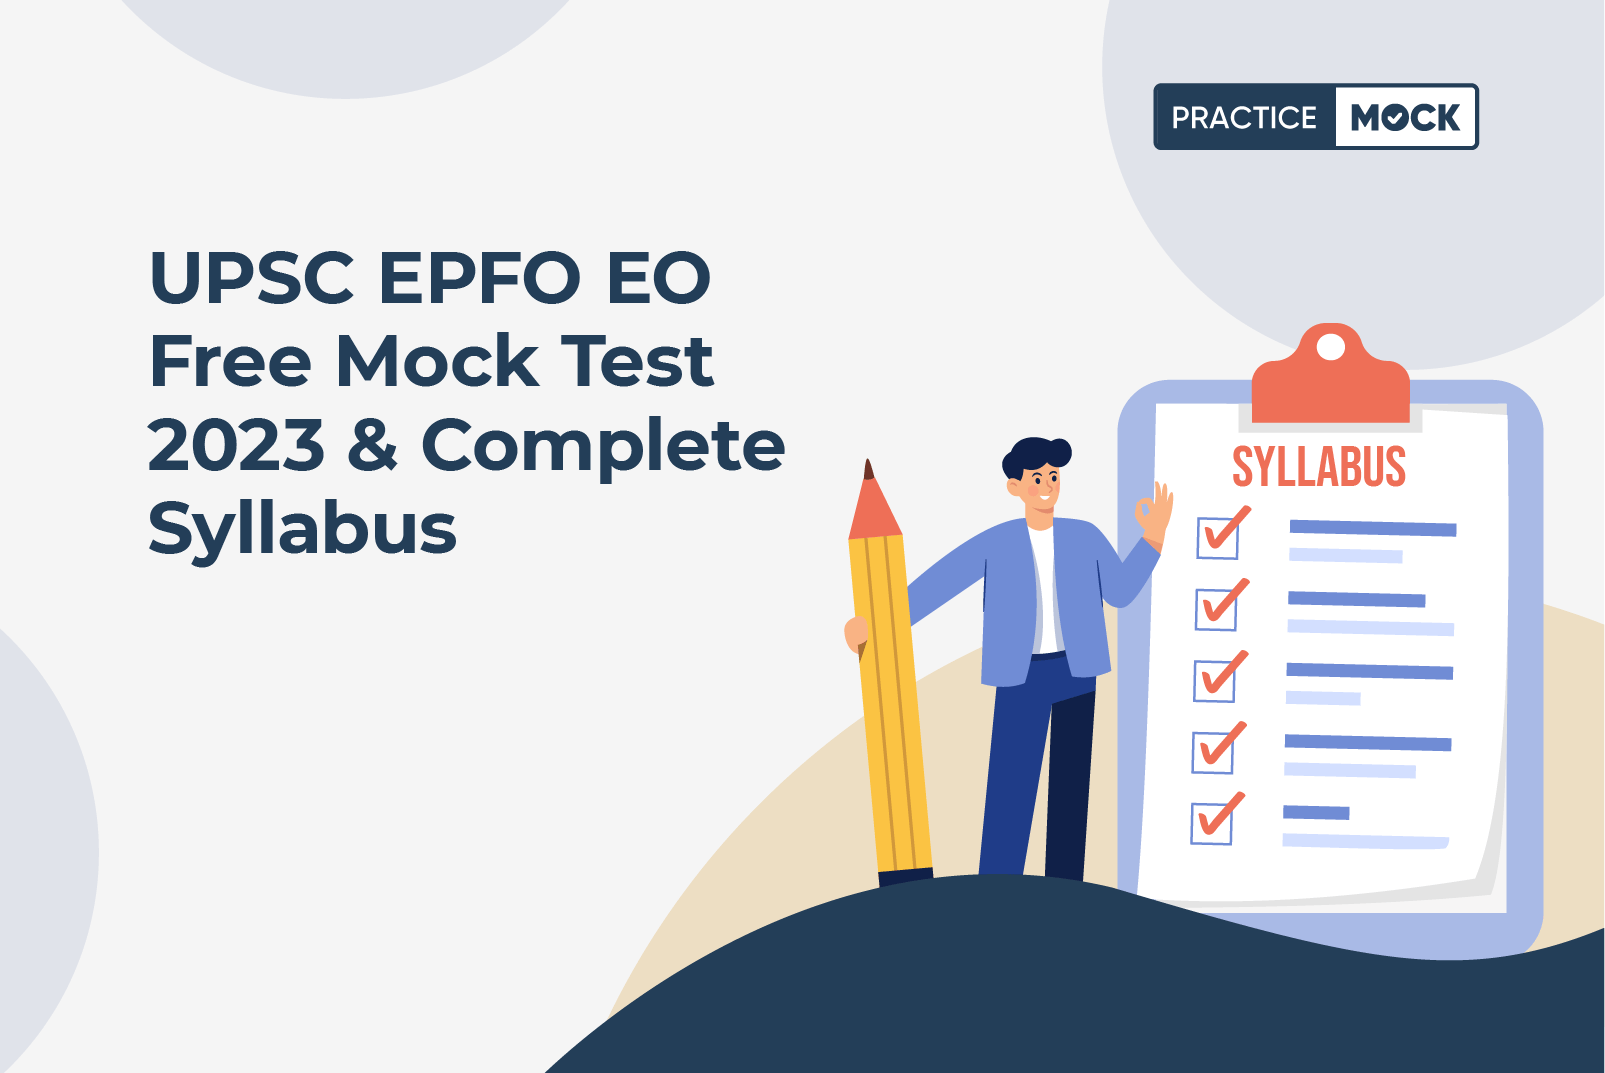 UPSC EPFO EO Free Mock Test 2023 & Complete Syllabus